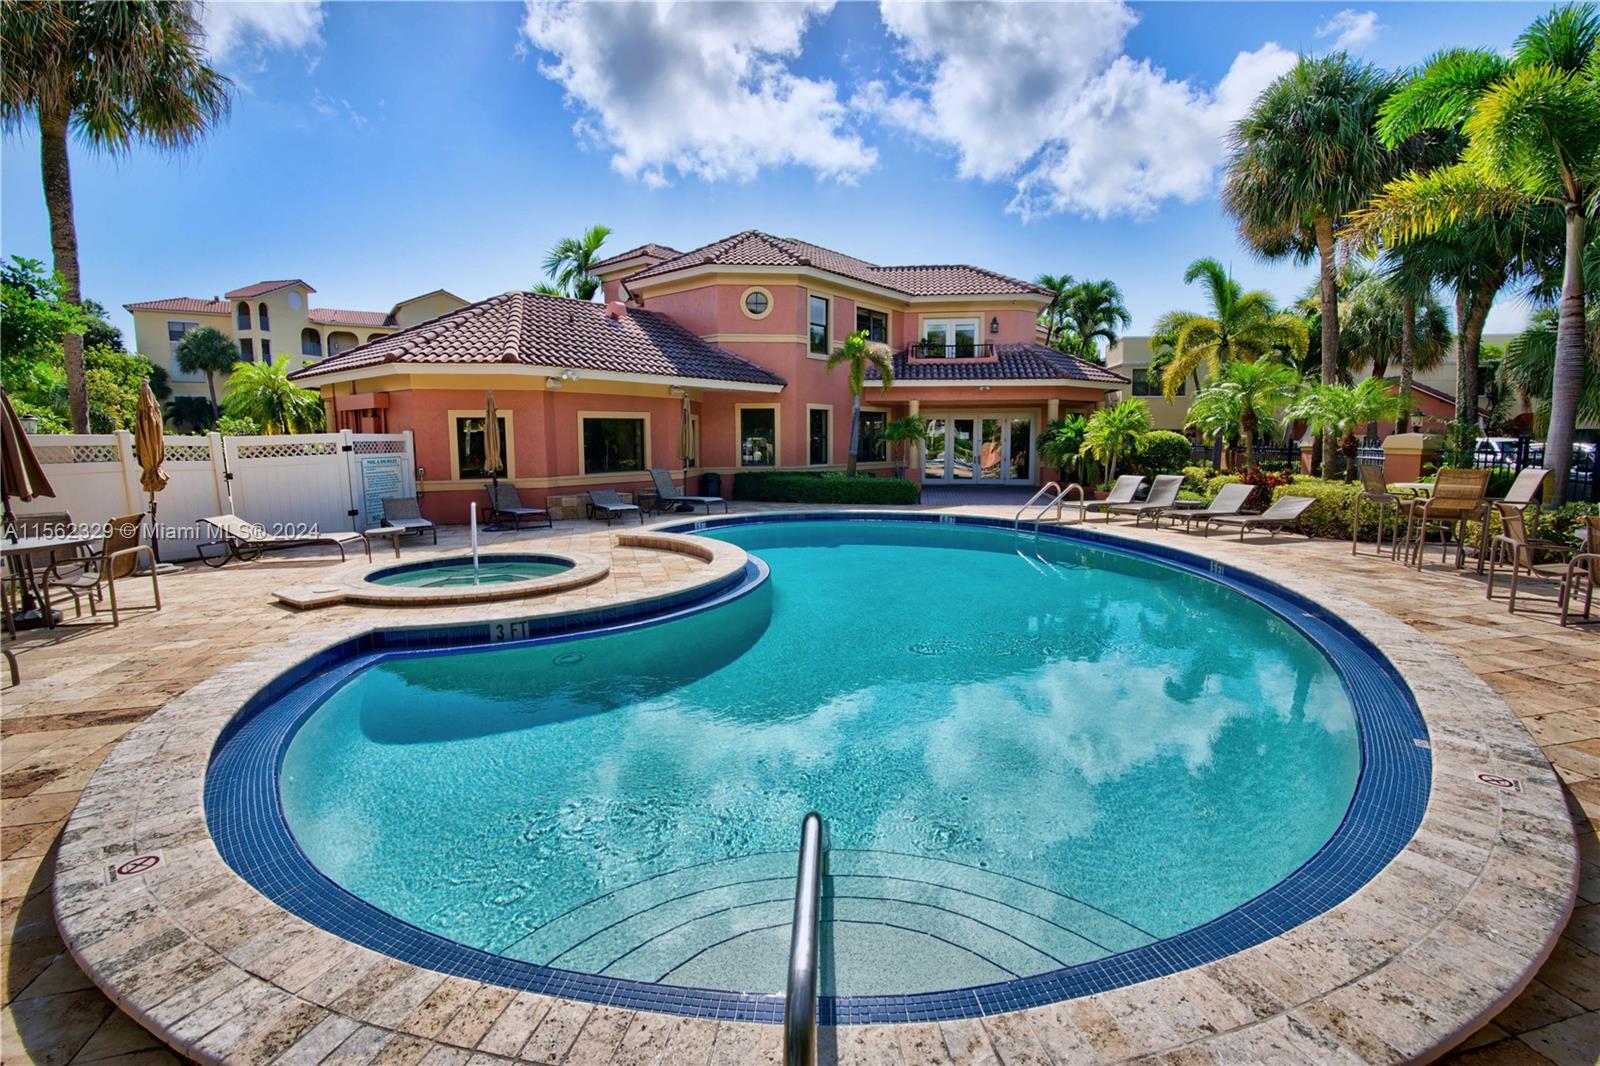 Rental Property at 600 Uno Lago Dr 302, Juno Beach, Palm Beach County, Florida - Bedrooms: 2 
Bathrooms: 2  - $2,300 MO.